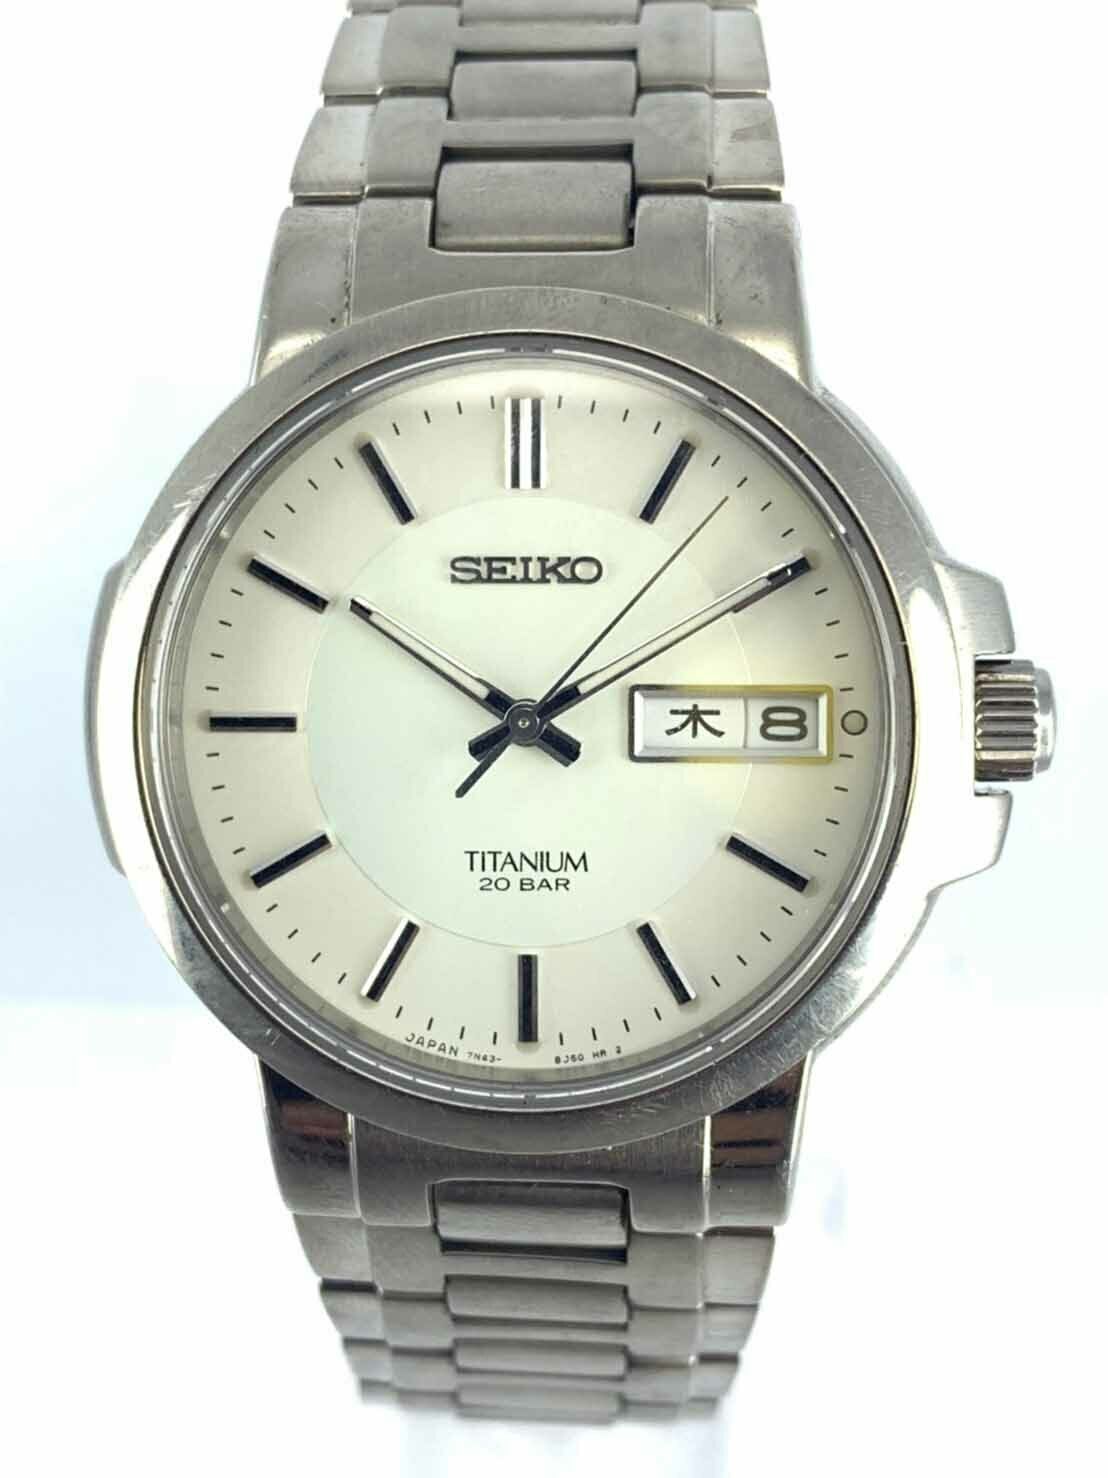 Vintage SEIKO TITANIUM 7N43-7B80 Quartz Wrist Watch Japan 